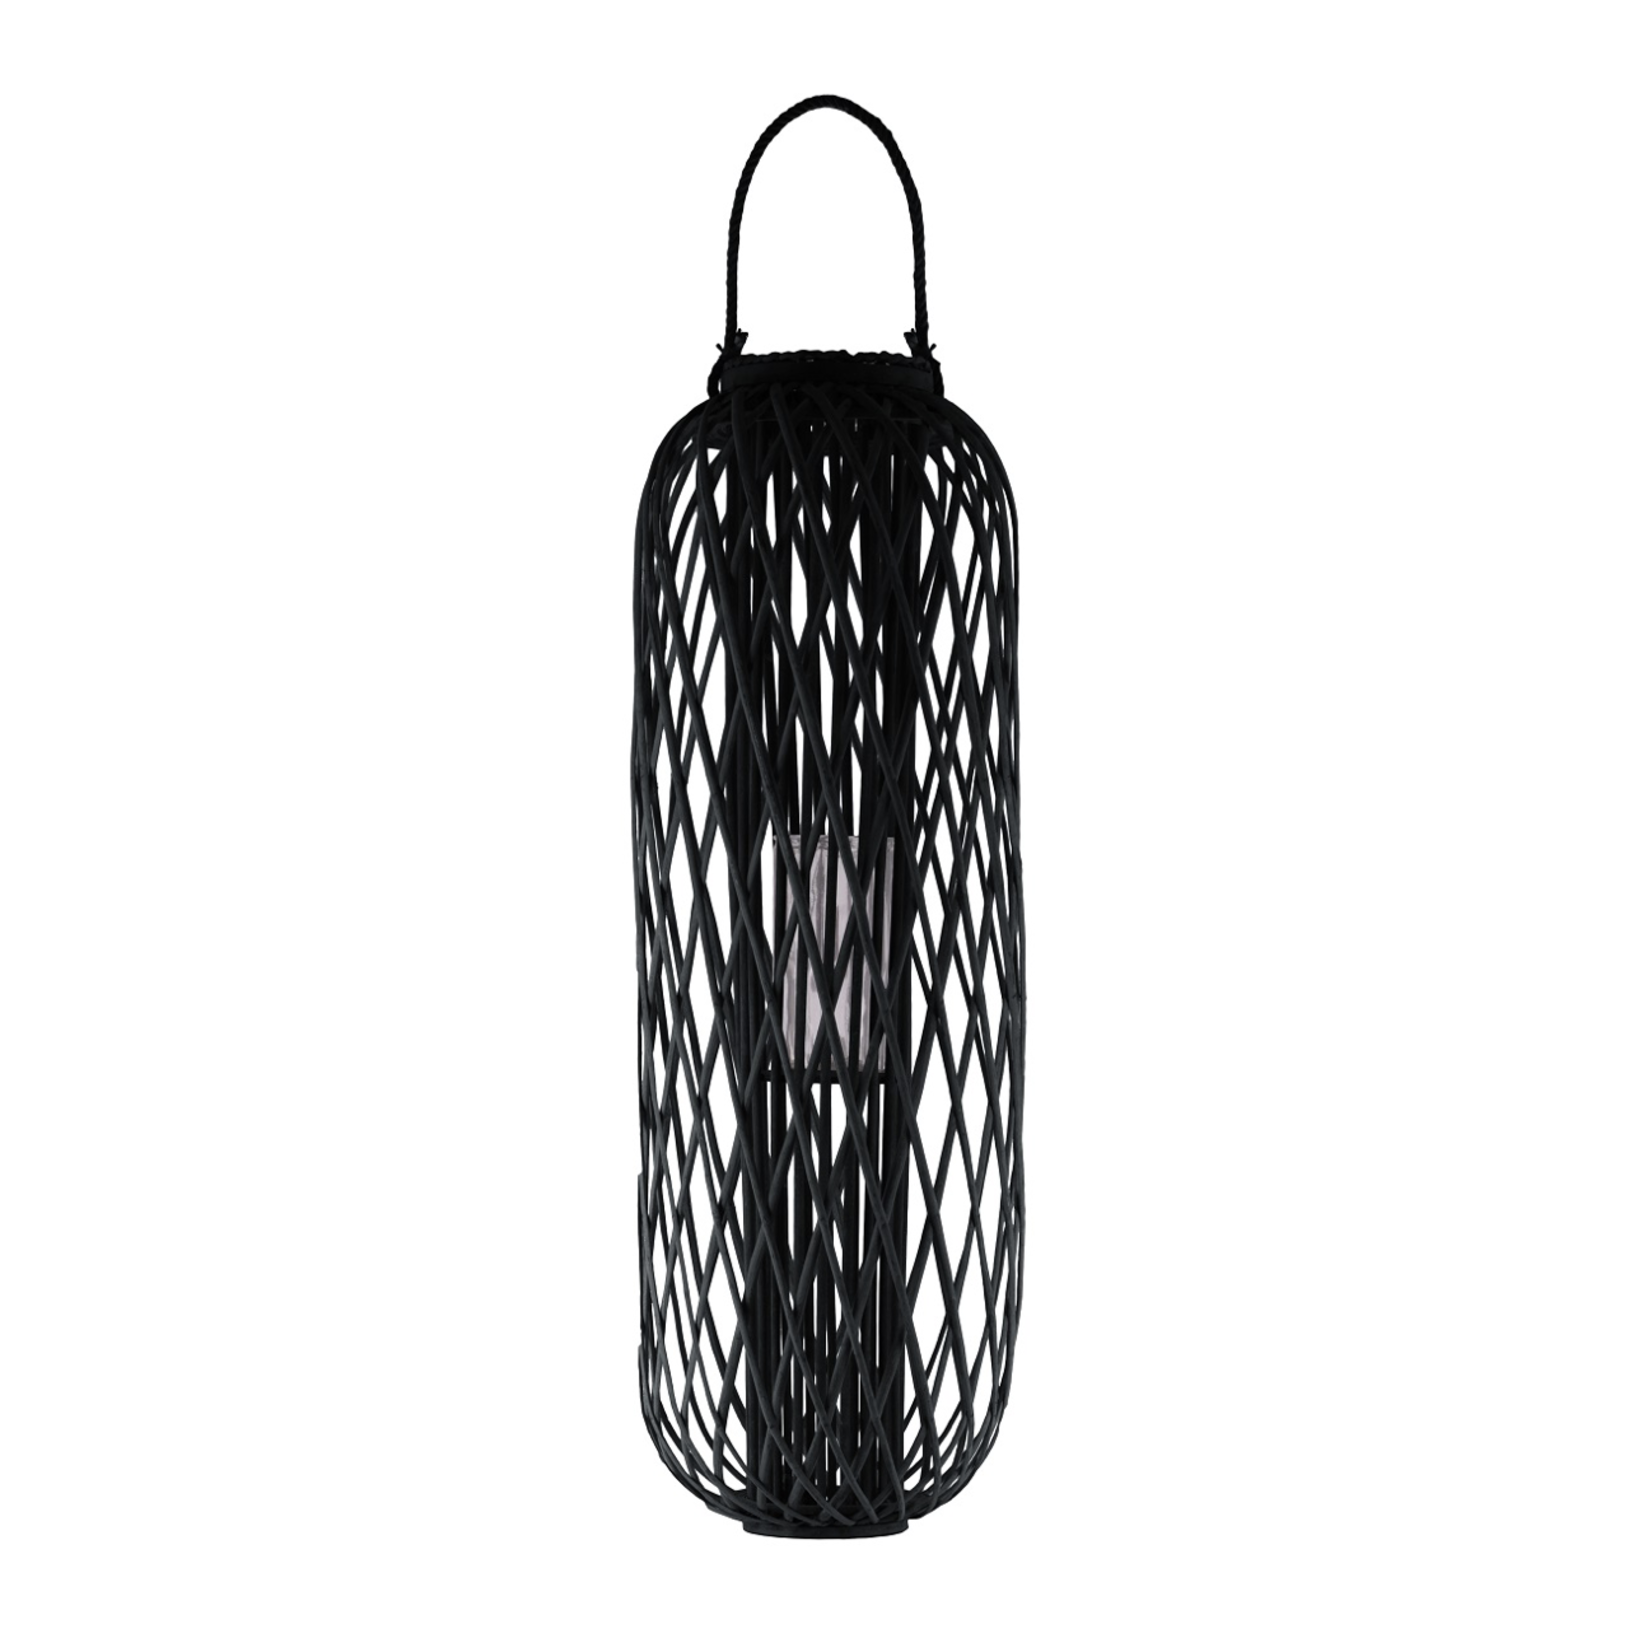 47.25”H X 15” Bamboo Round Lantern with Braided Rope Lip and Handle, Lattice Design Body and Hurricane Candle Holder Coated Finish Black